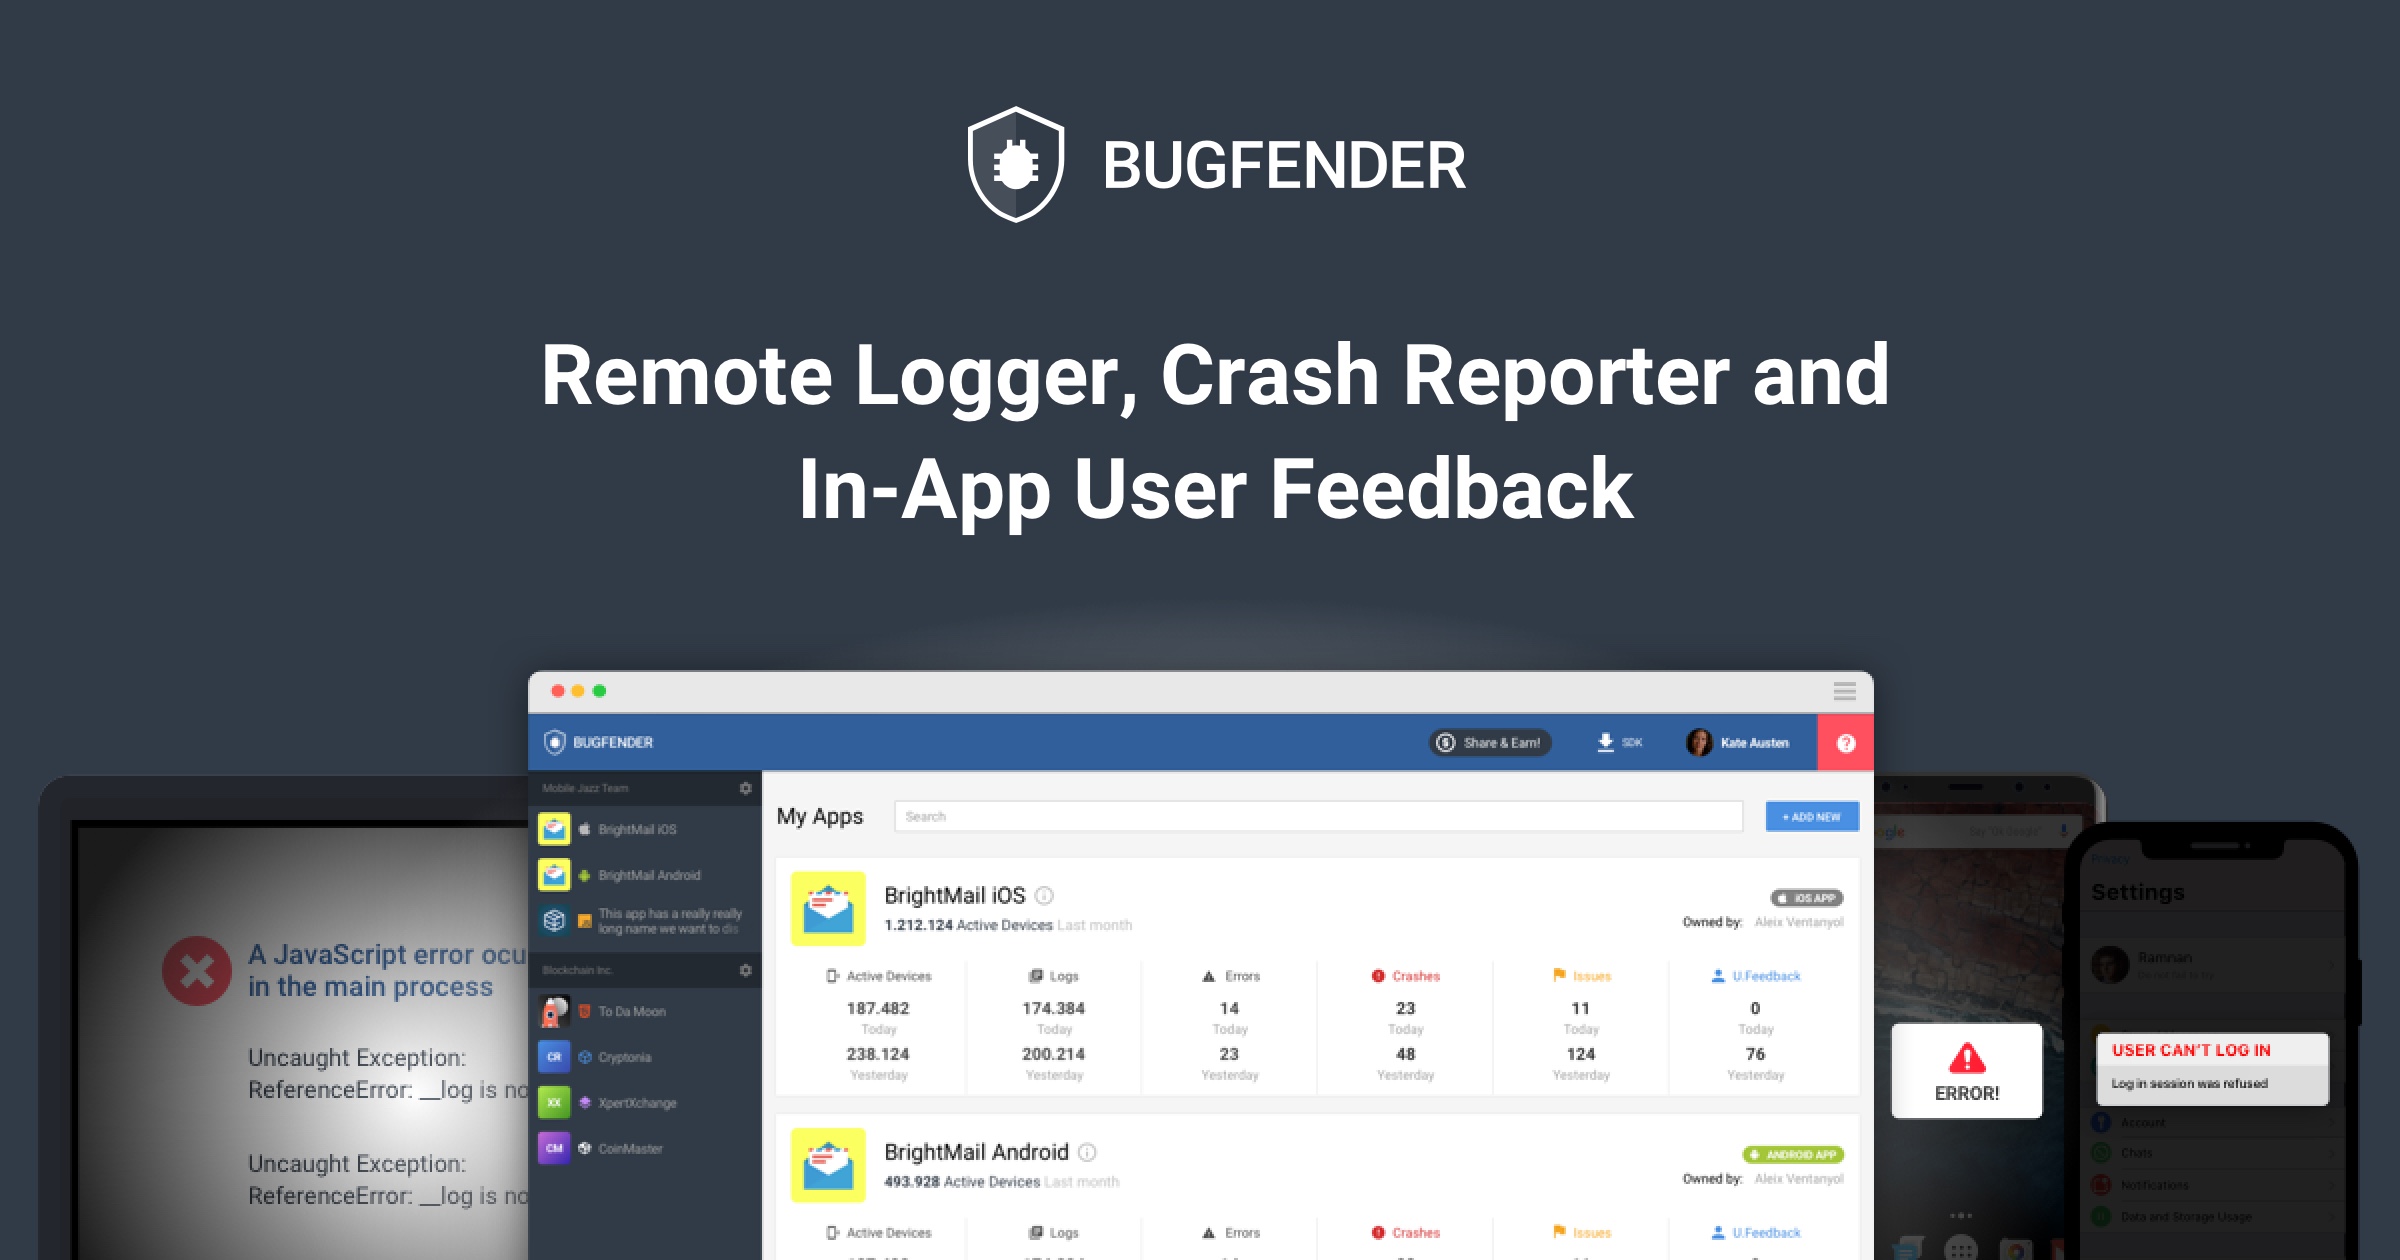 Preview image of website "Bugfender | Cloud Remote Logger, Crash Reporter, In-App Feedback"